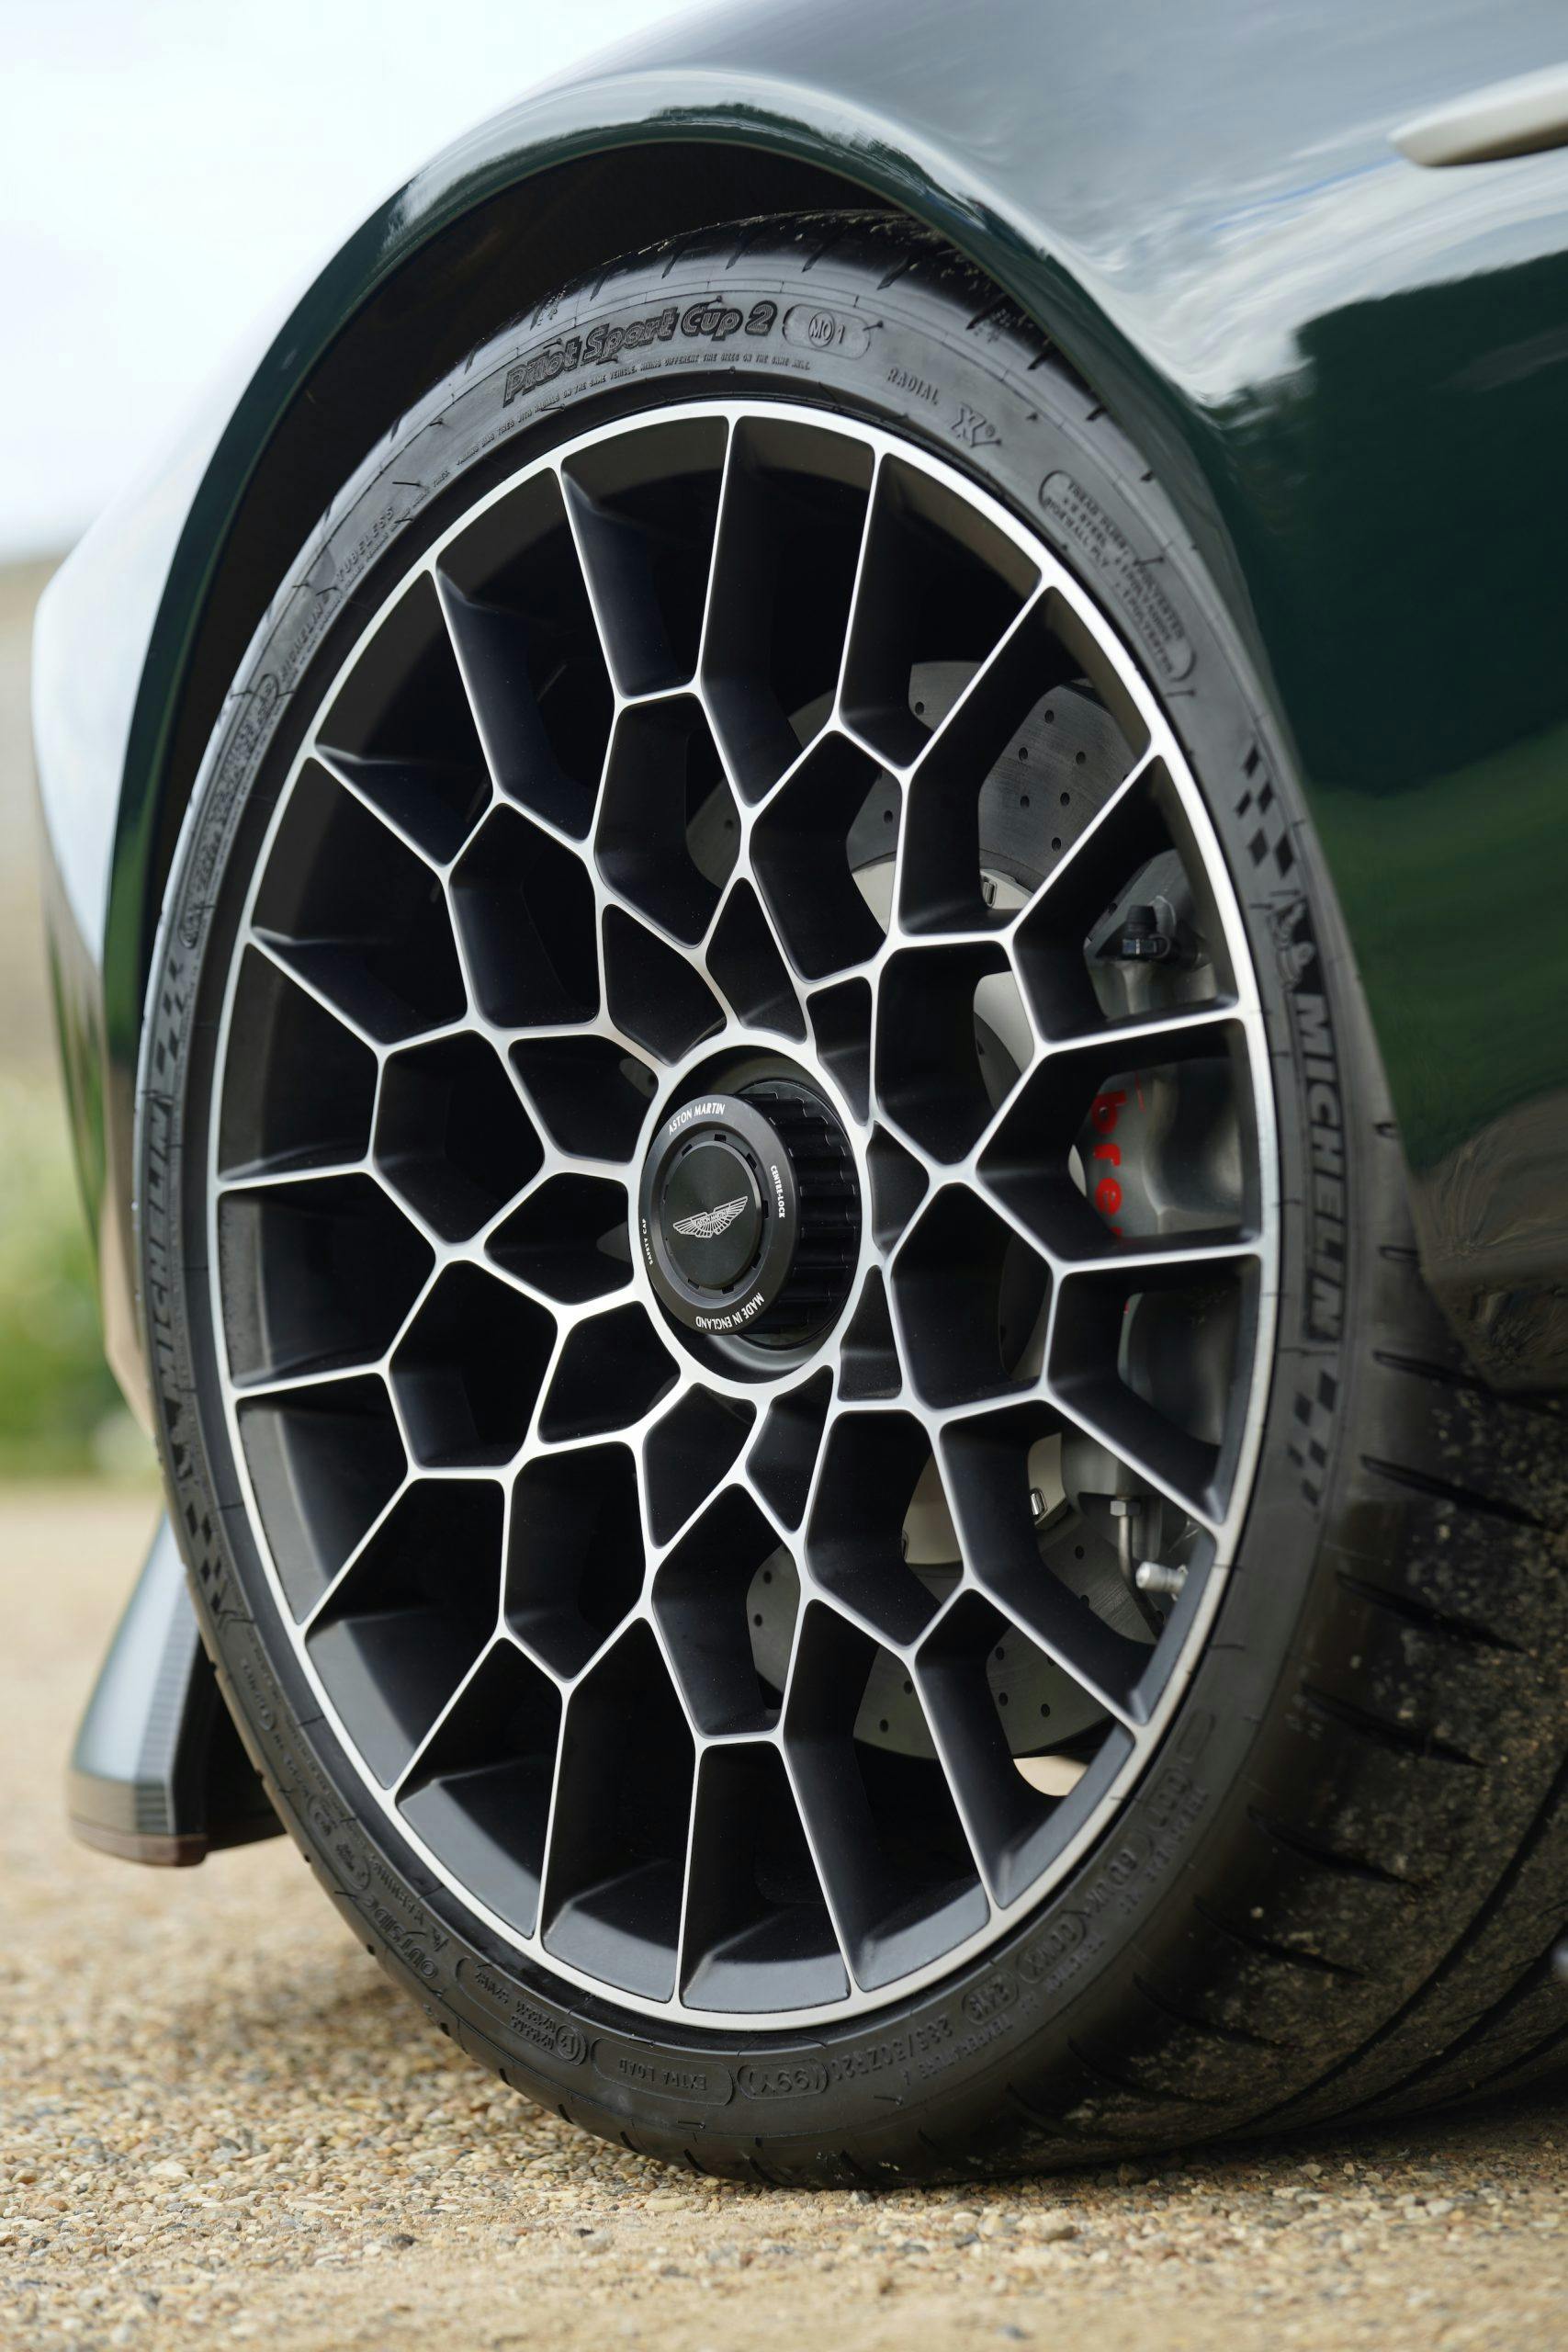 Aston Martin Victor wheel detail